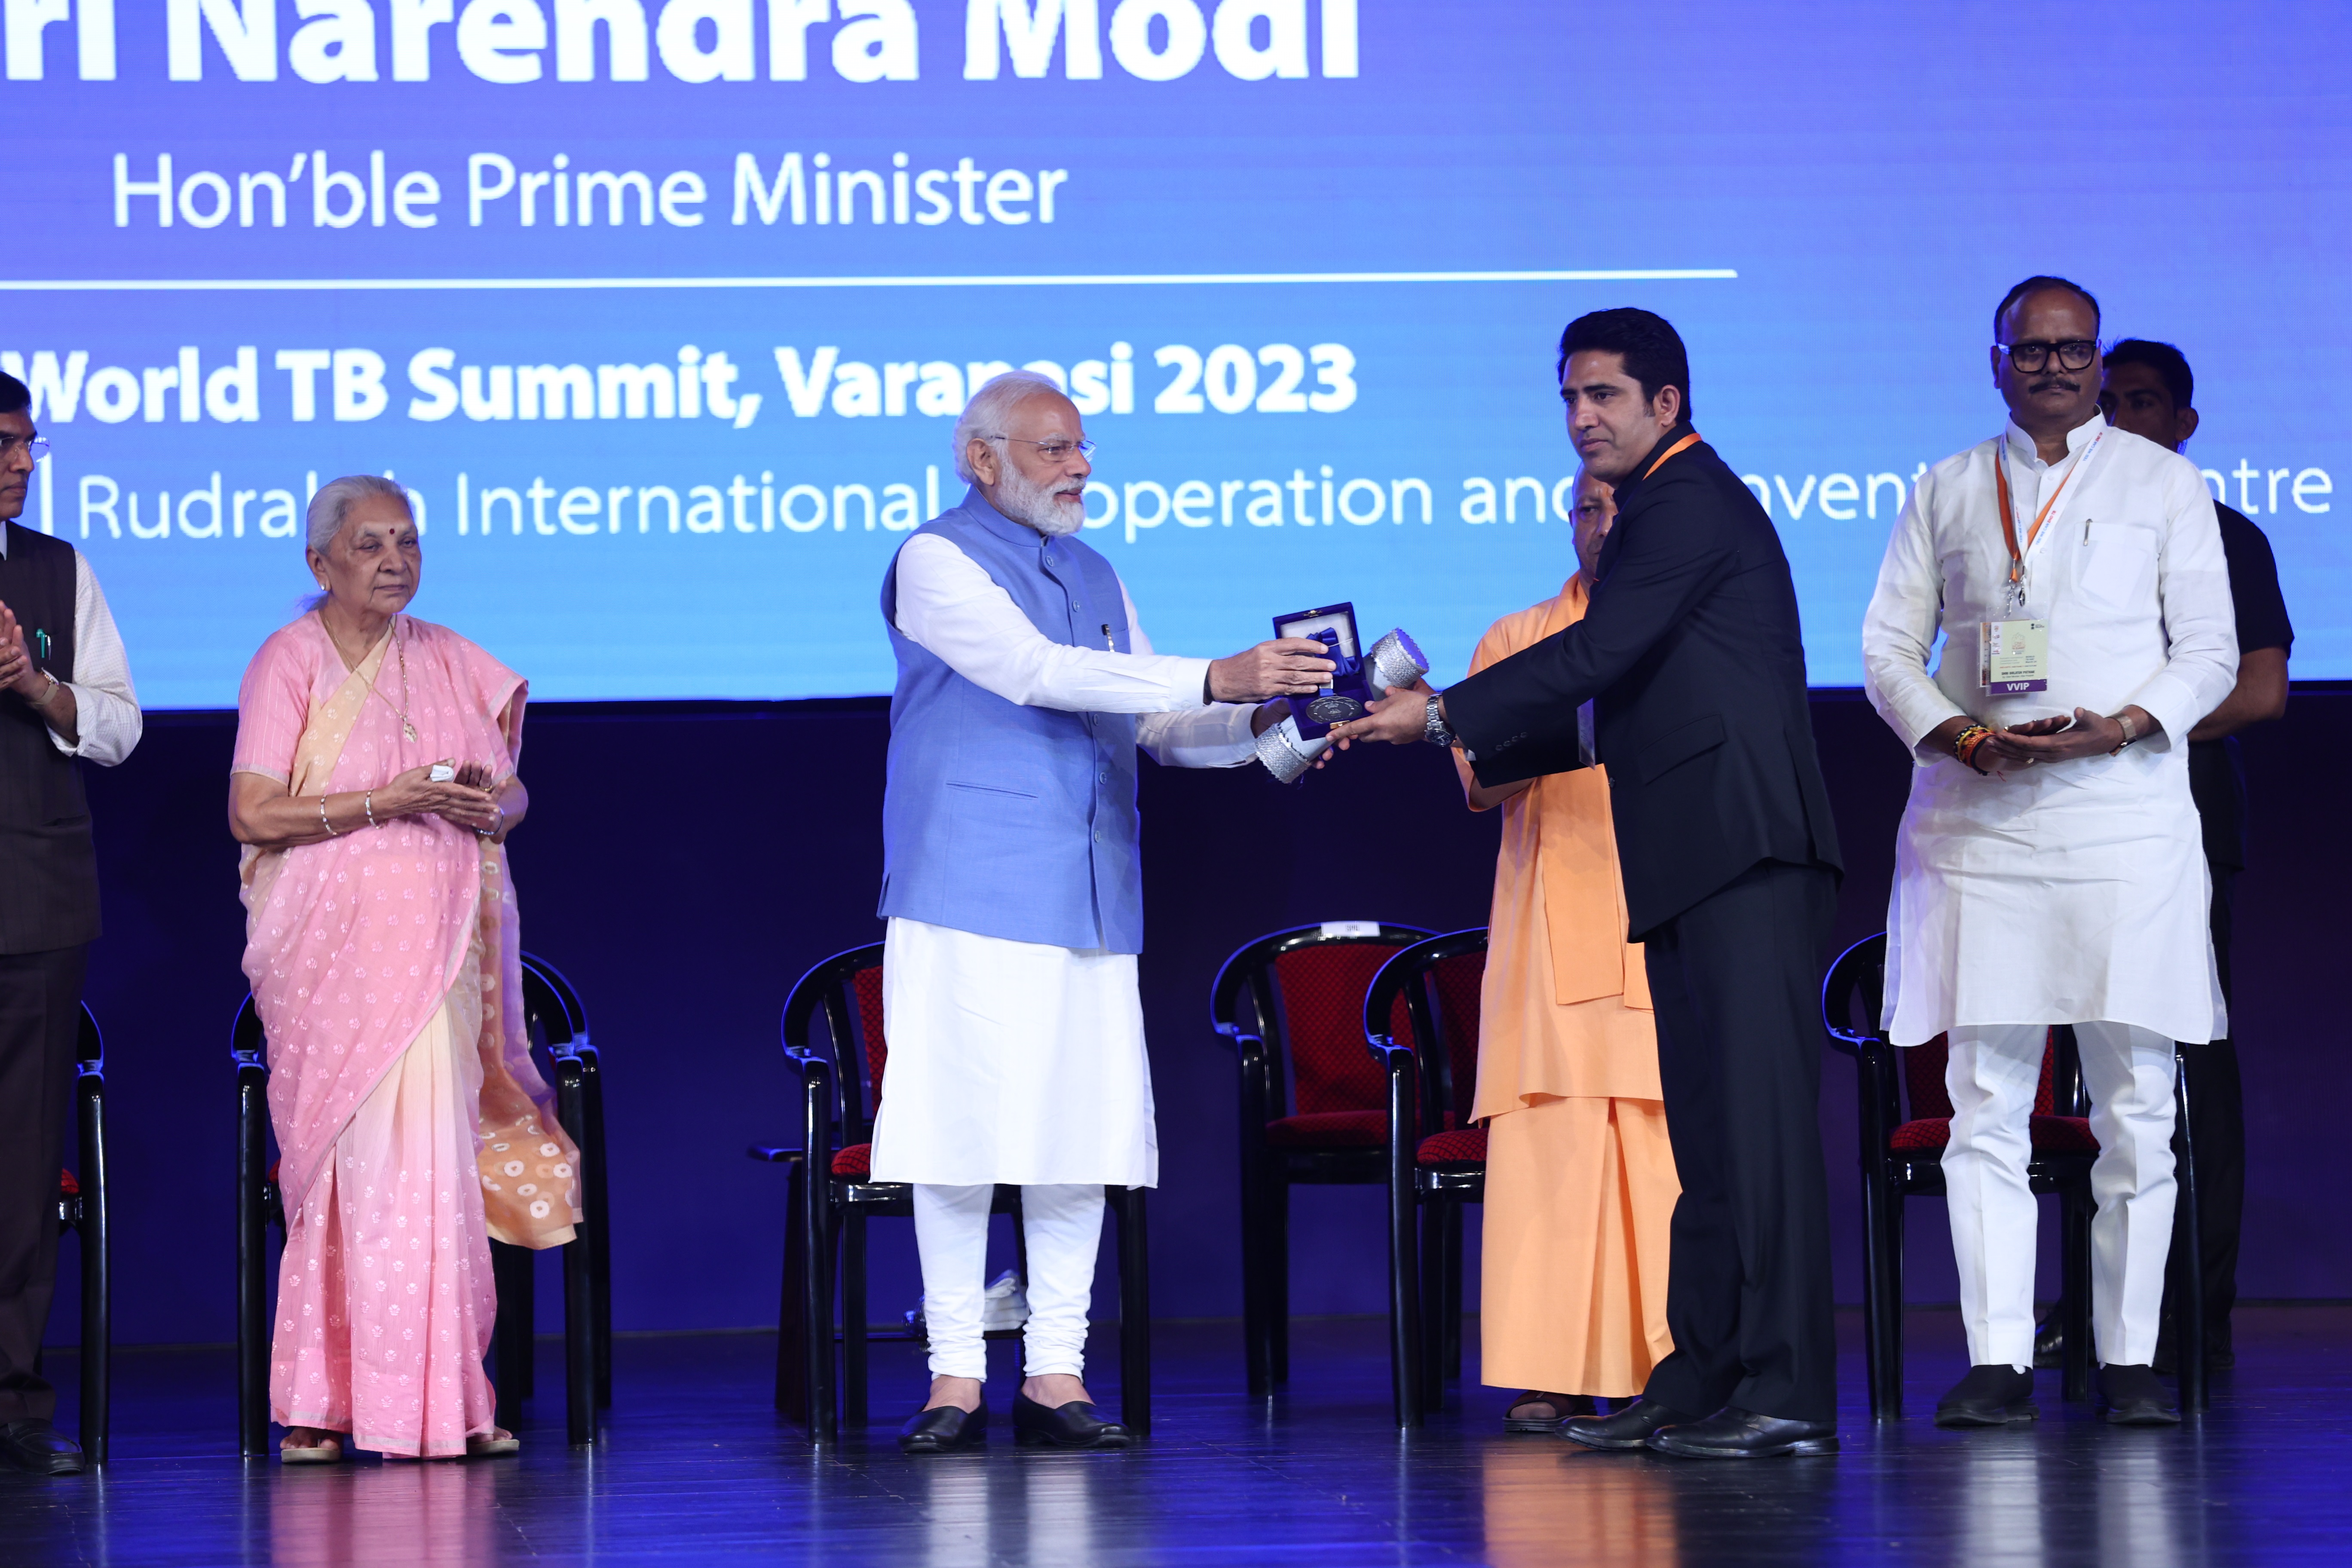 Hon'ble Prime Minister at One World TB Summit, Varanasi 2023